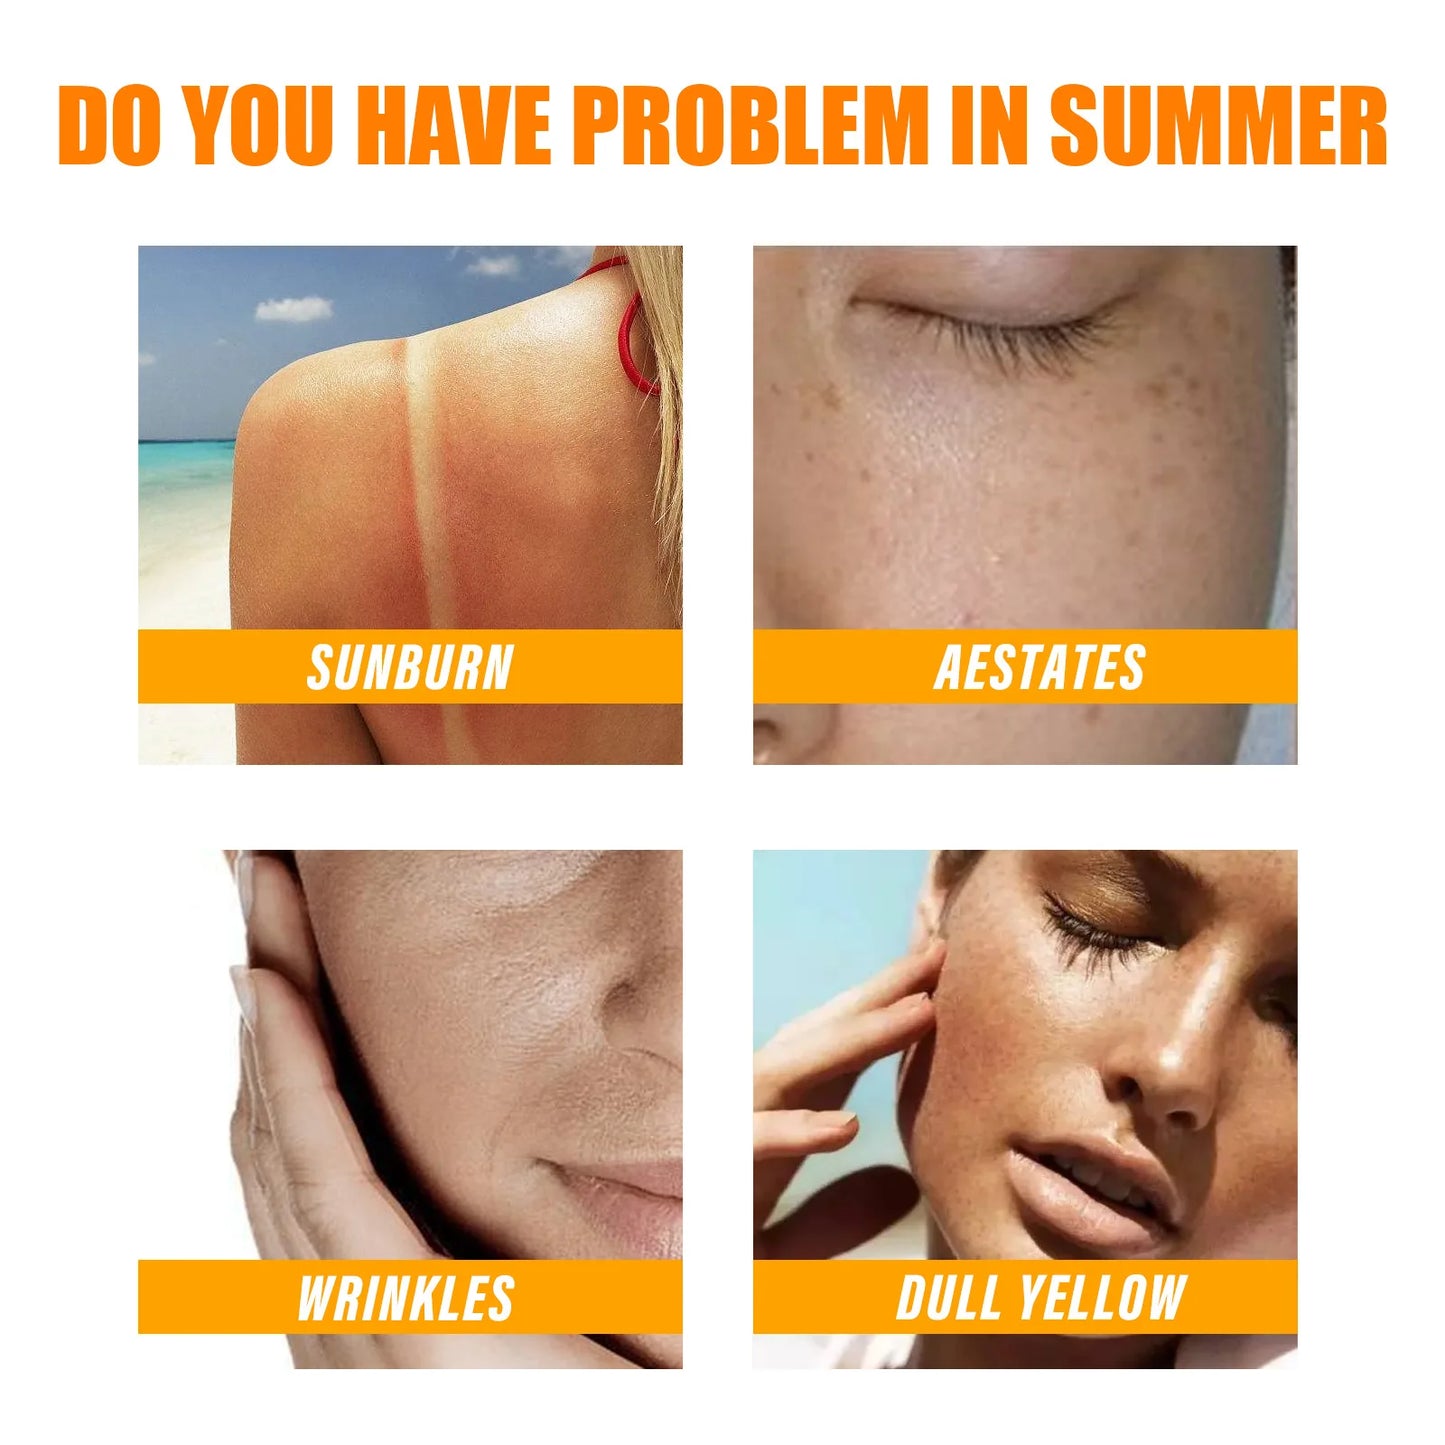 EELHOE Sunscreen Spf 90 Whitening Sun Cream for Face Body Oil-control Bleaching Face Moisturizer Sunblock Skin Protective Cream